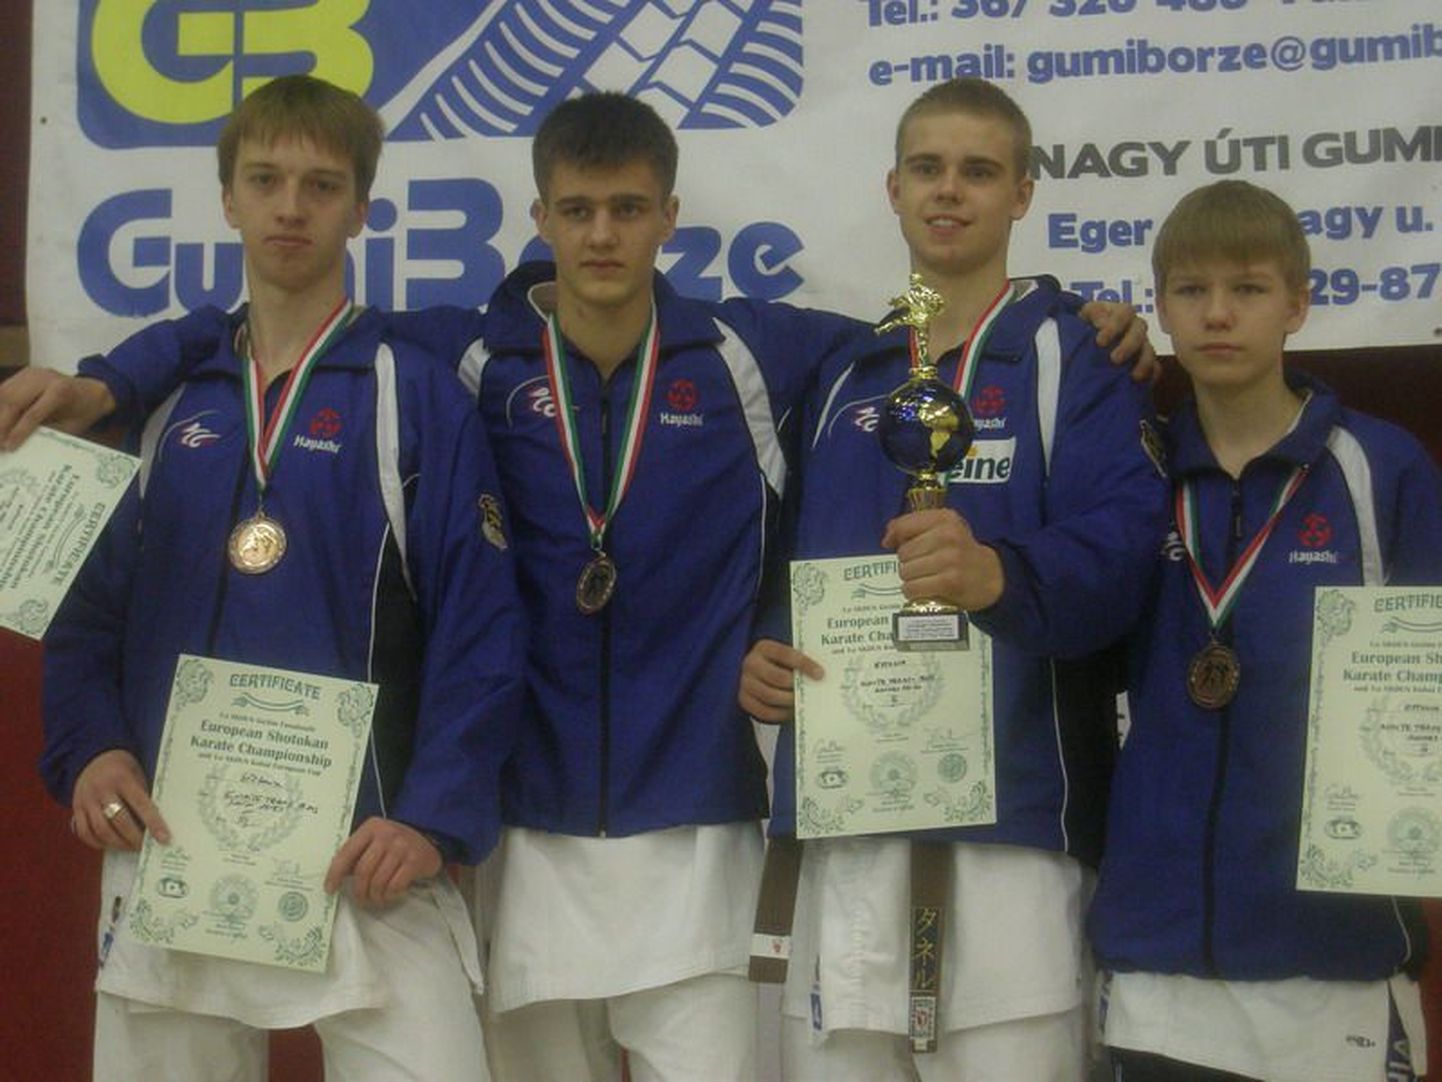 Cлева направо - Владислав Борисов, Дмитрий Воронин, Танель Паабо и Роберт Денисов.